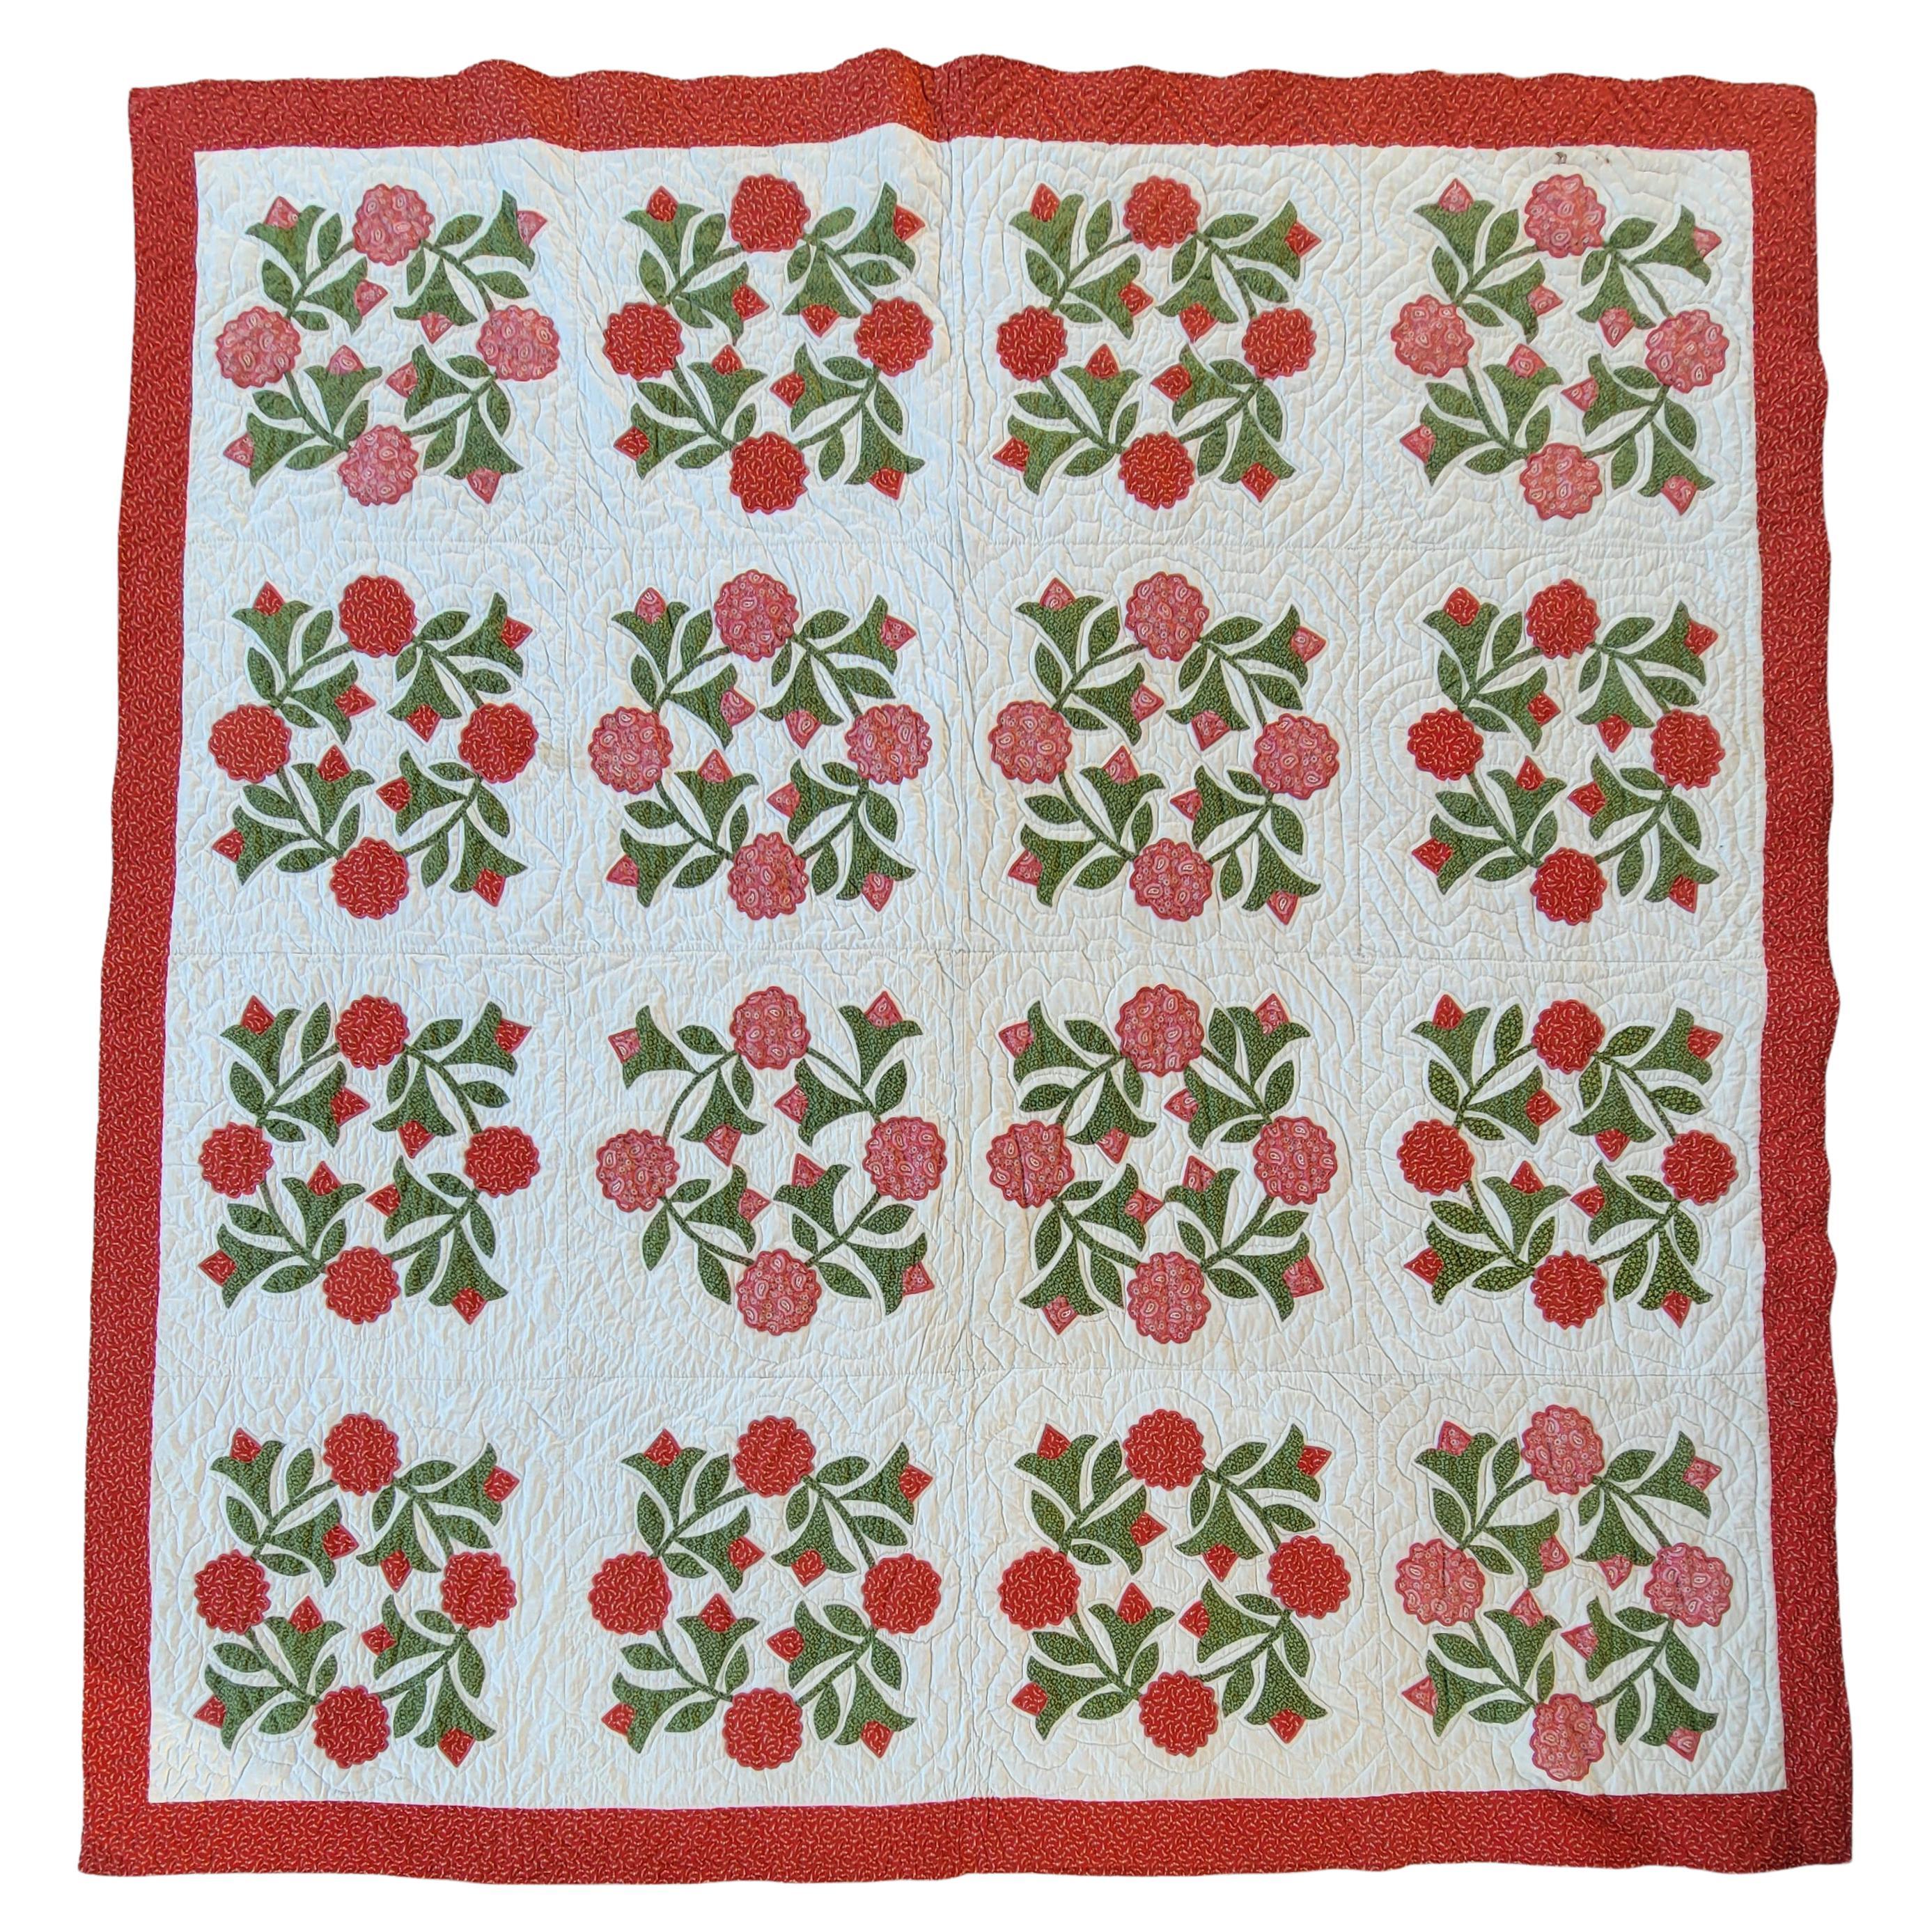 19thC Red & Green Wreath Applique Quilt